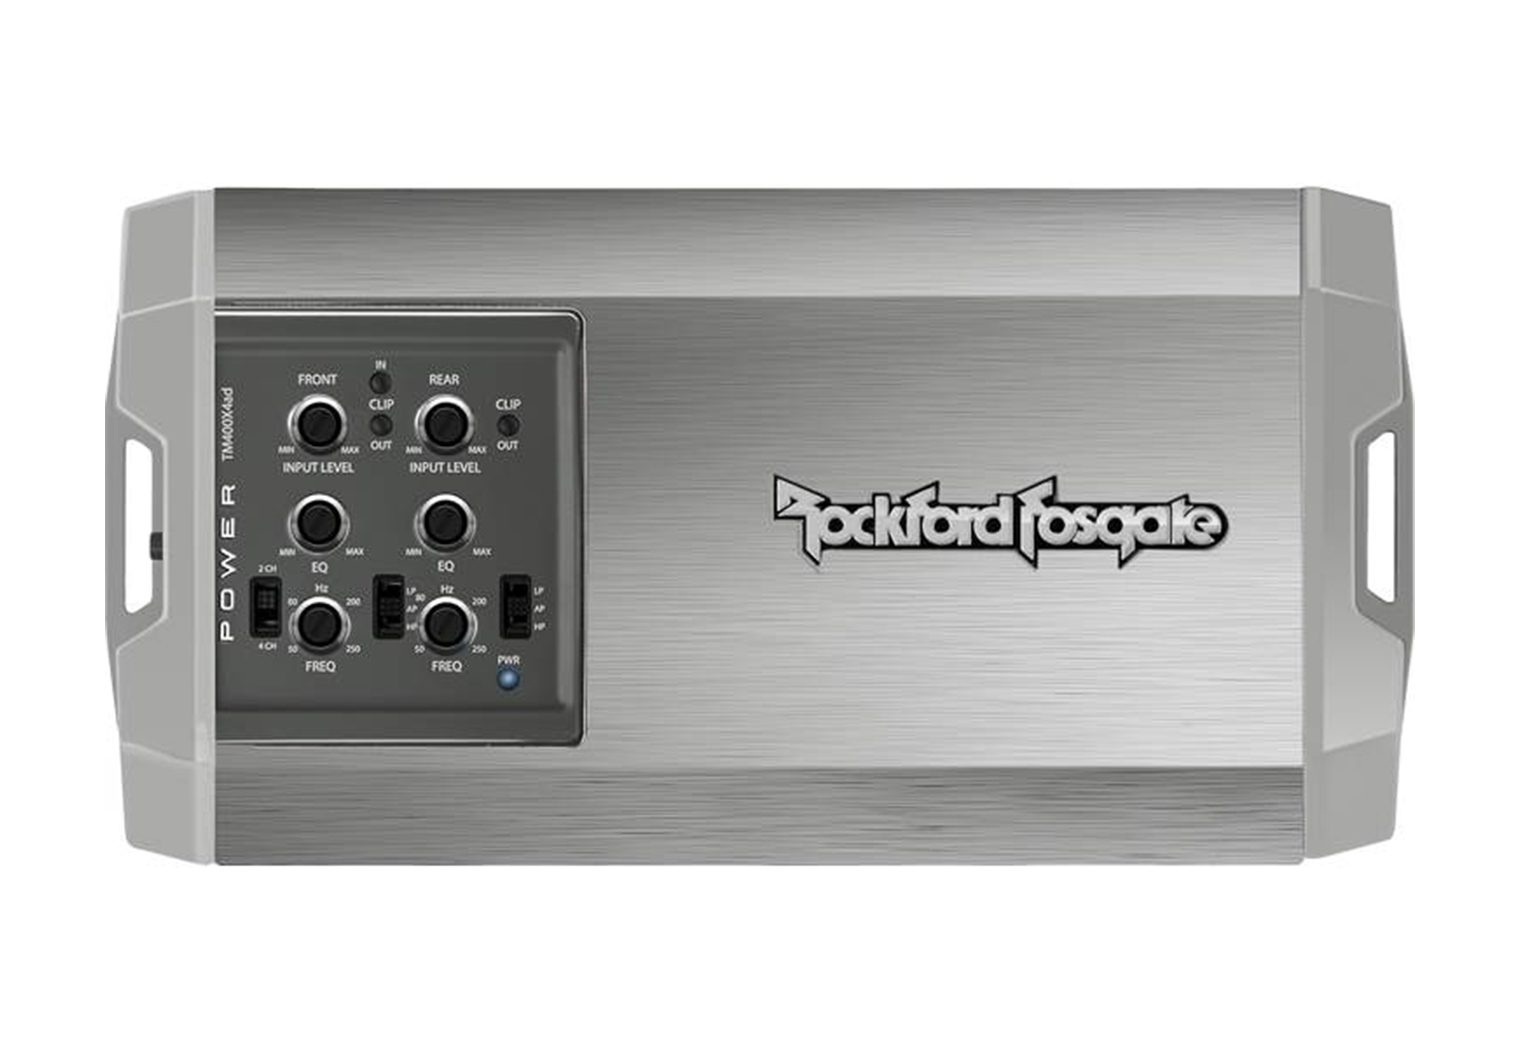 Rockford Fosgate HD14U-STAGE2 amp top